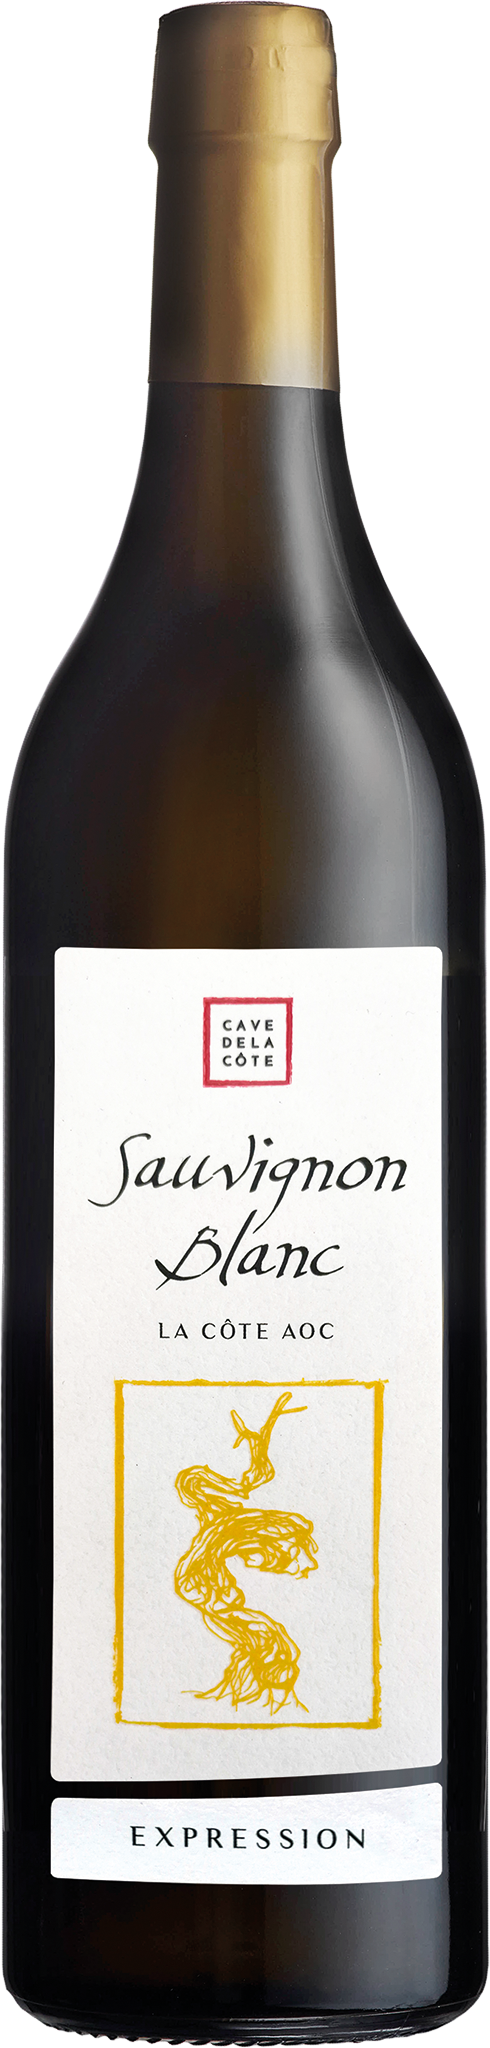 004670.002-75-Expression Sauvignon blanc.png